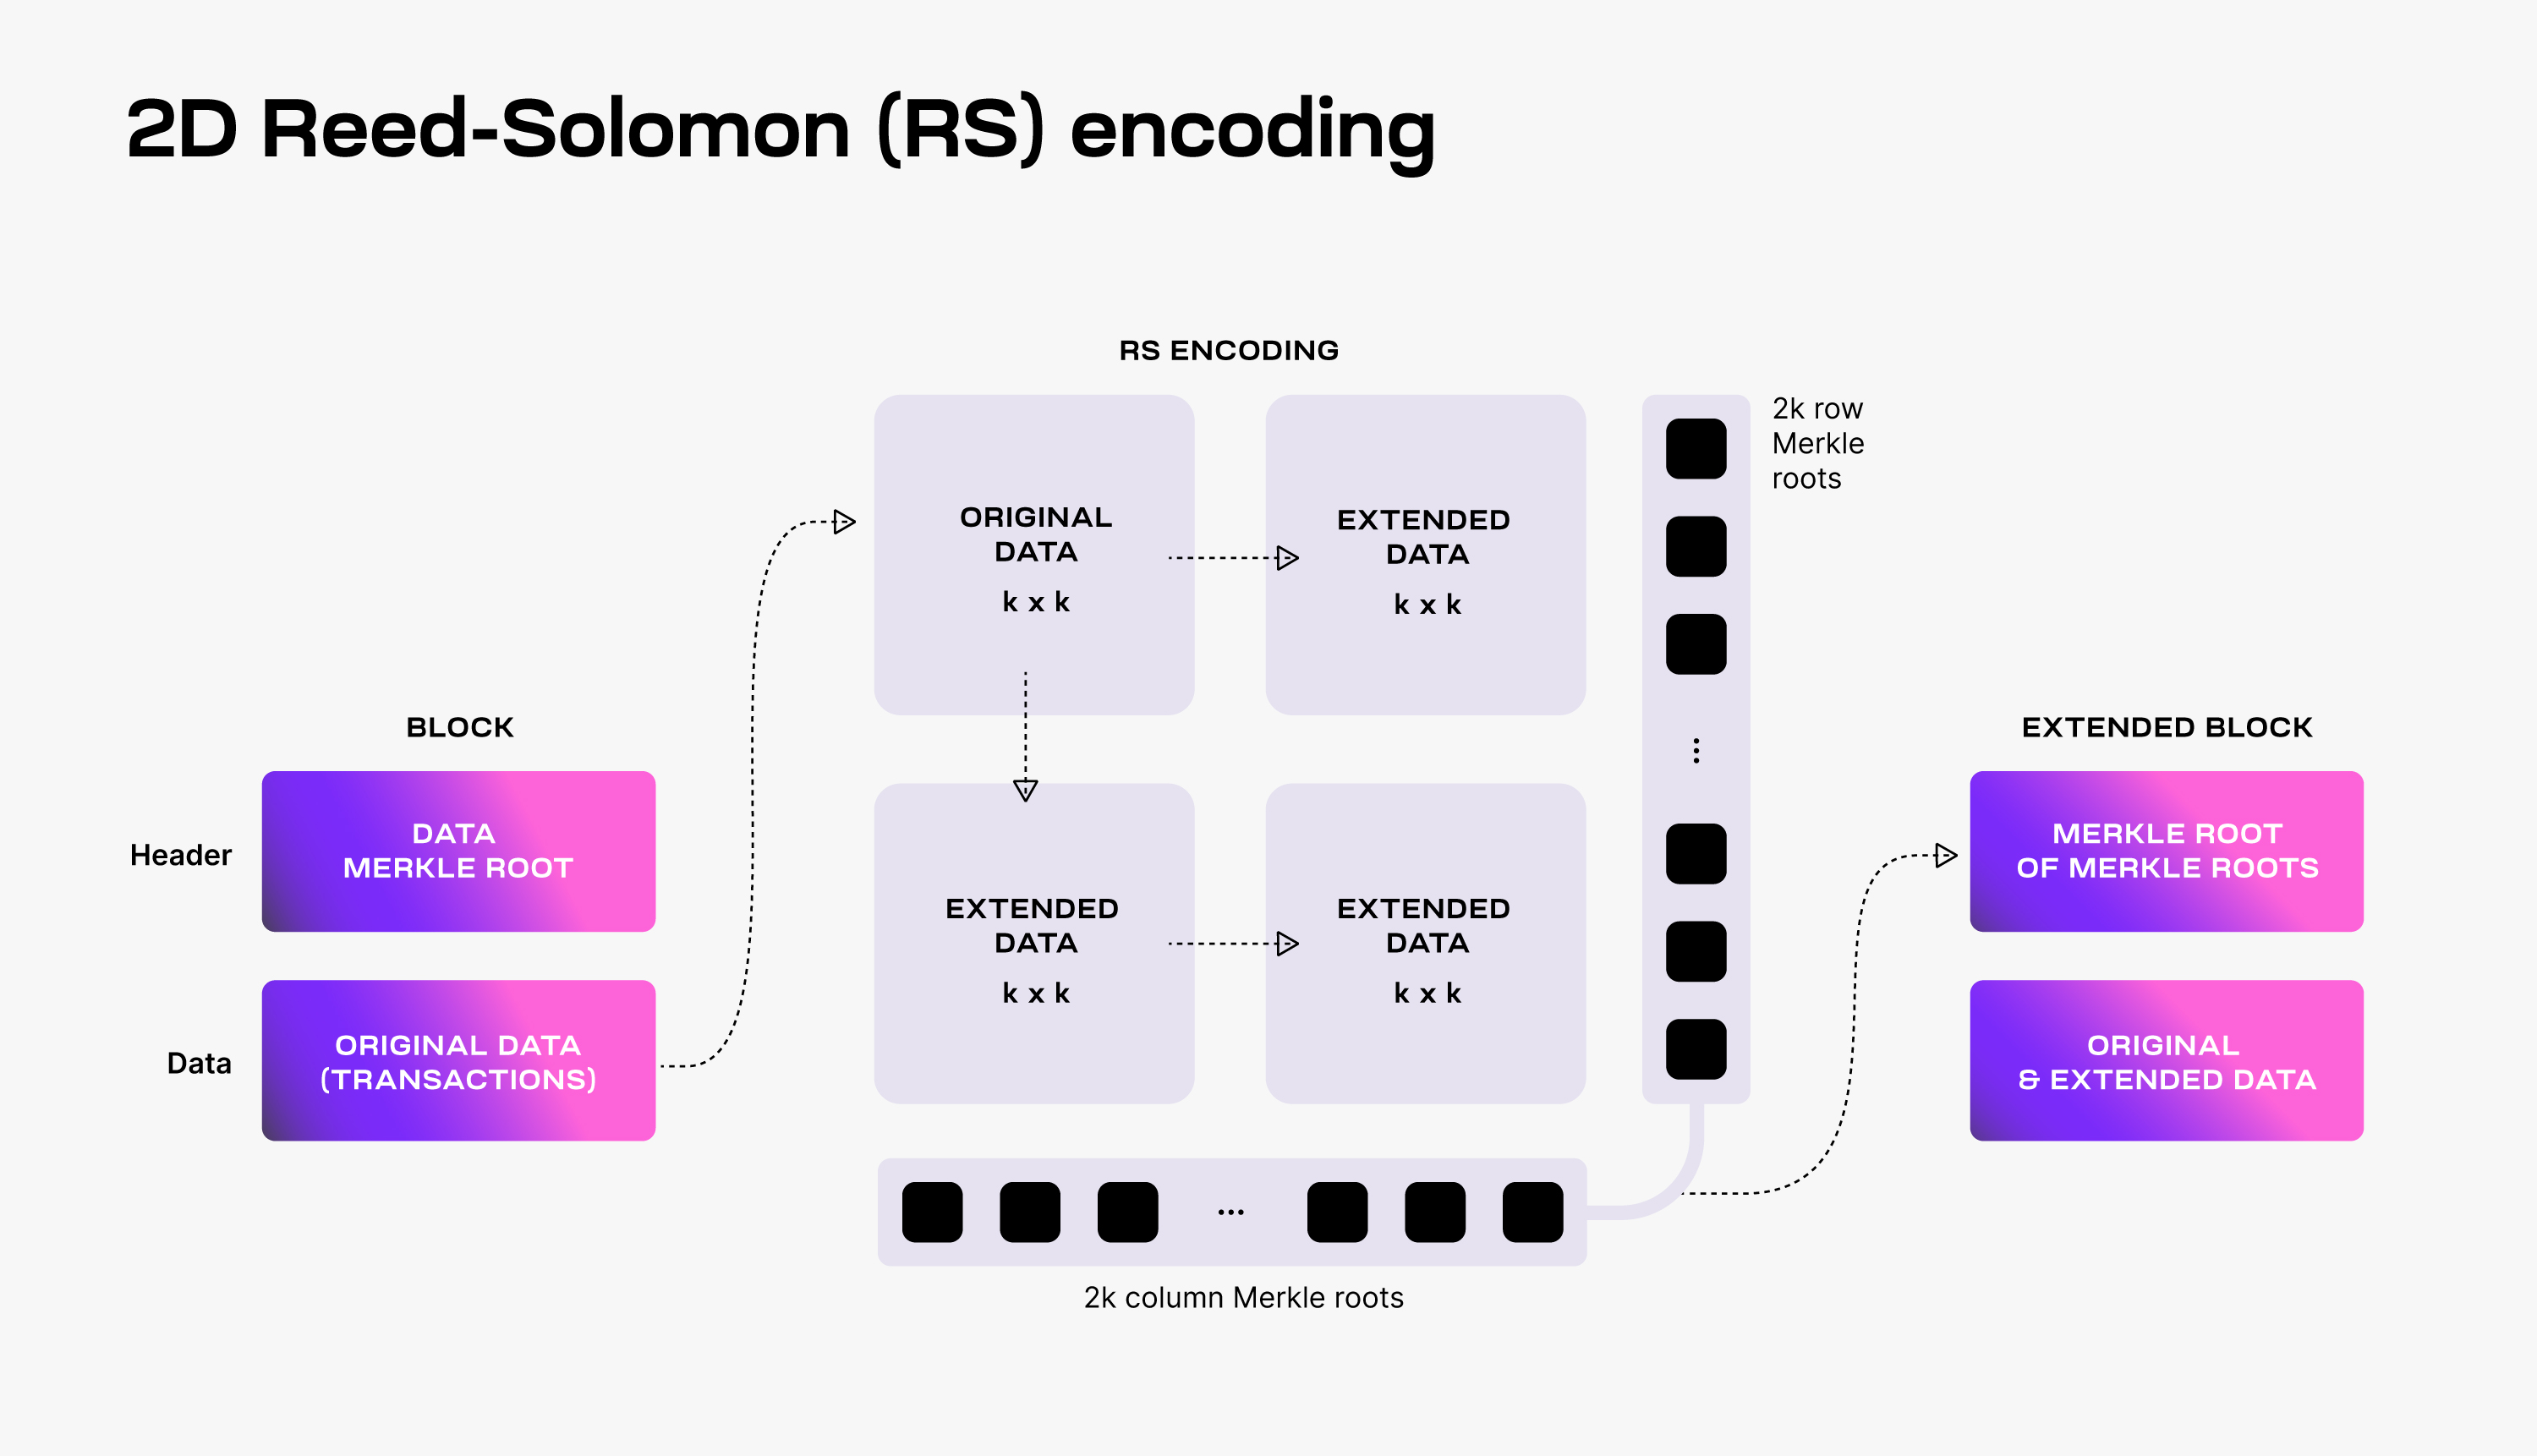 2D Reed-Soloman (RS) Encoding